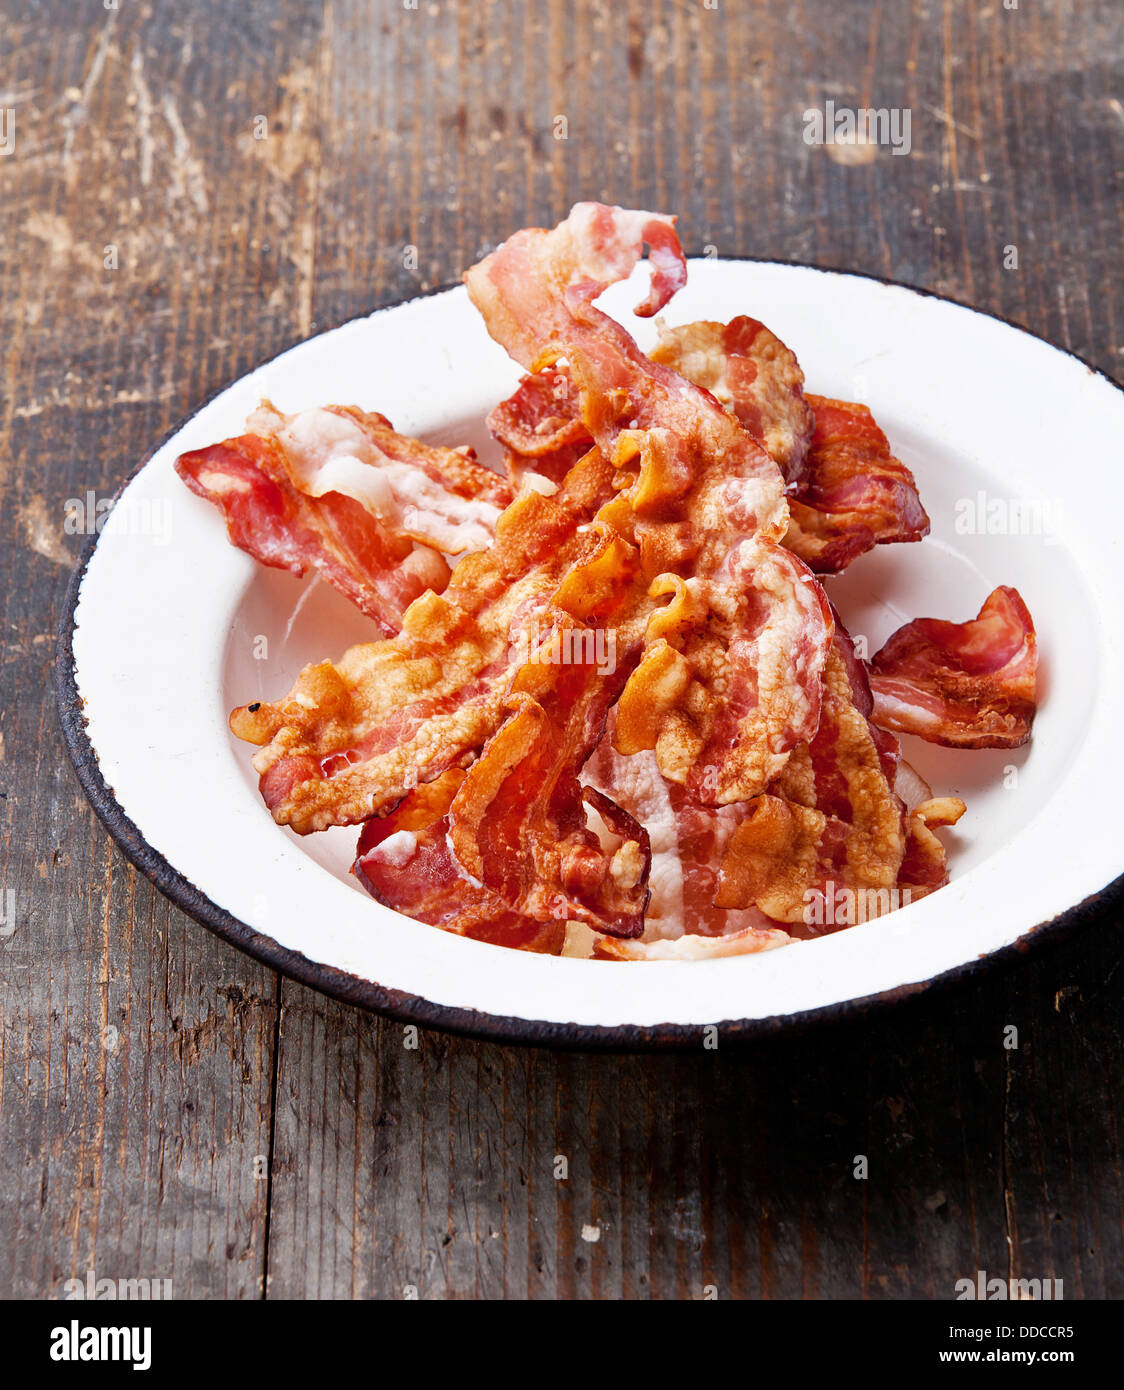 Crispy fried bacon on plate Stock Photo